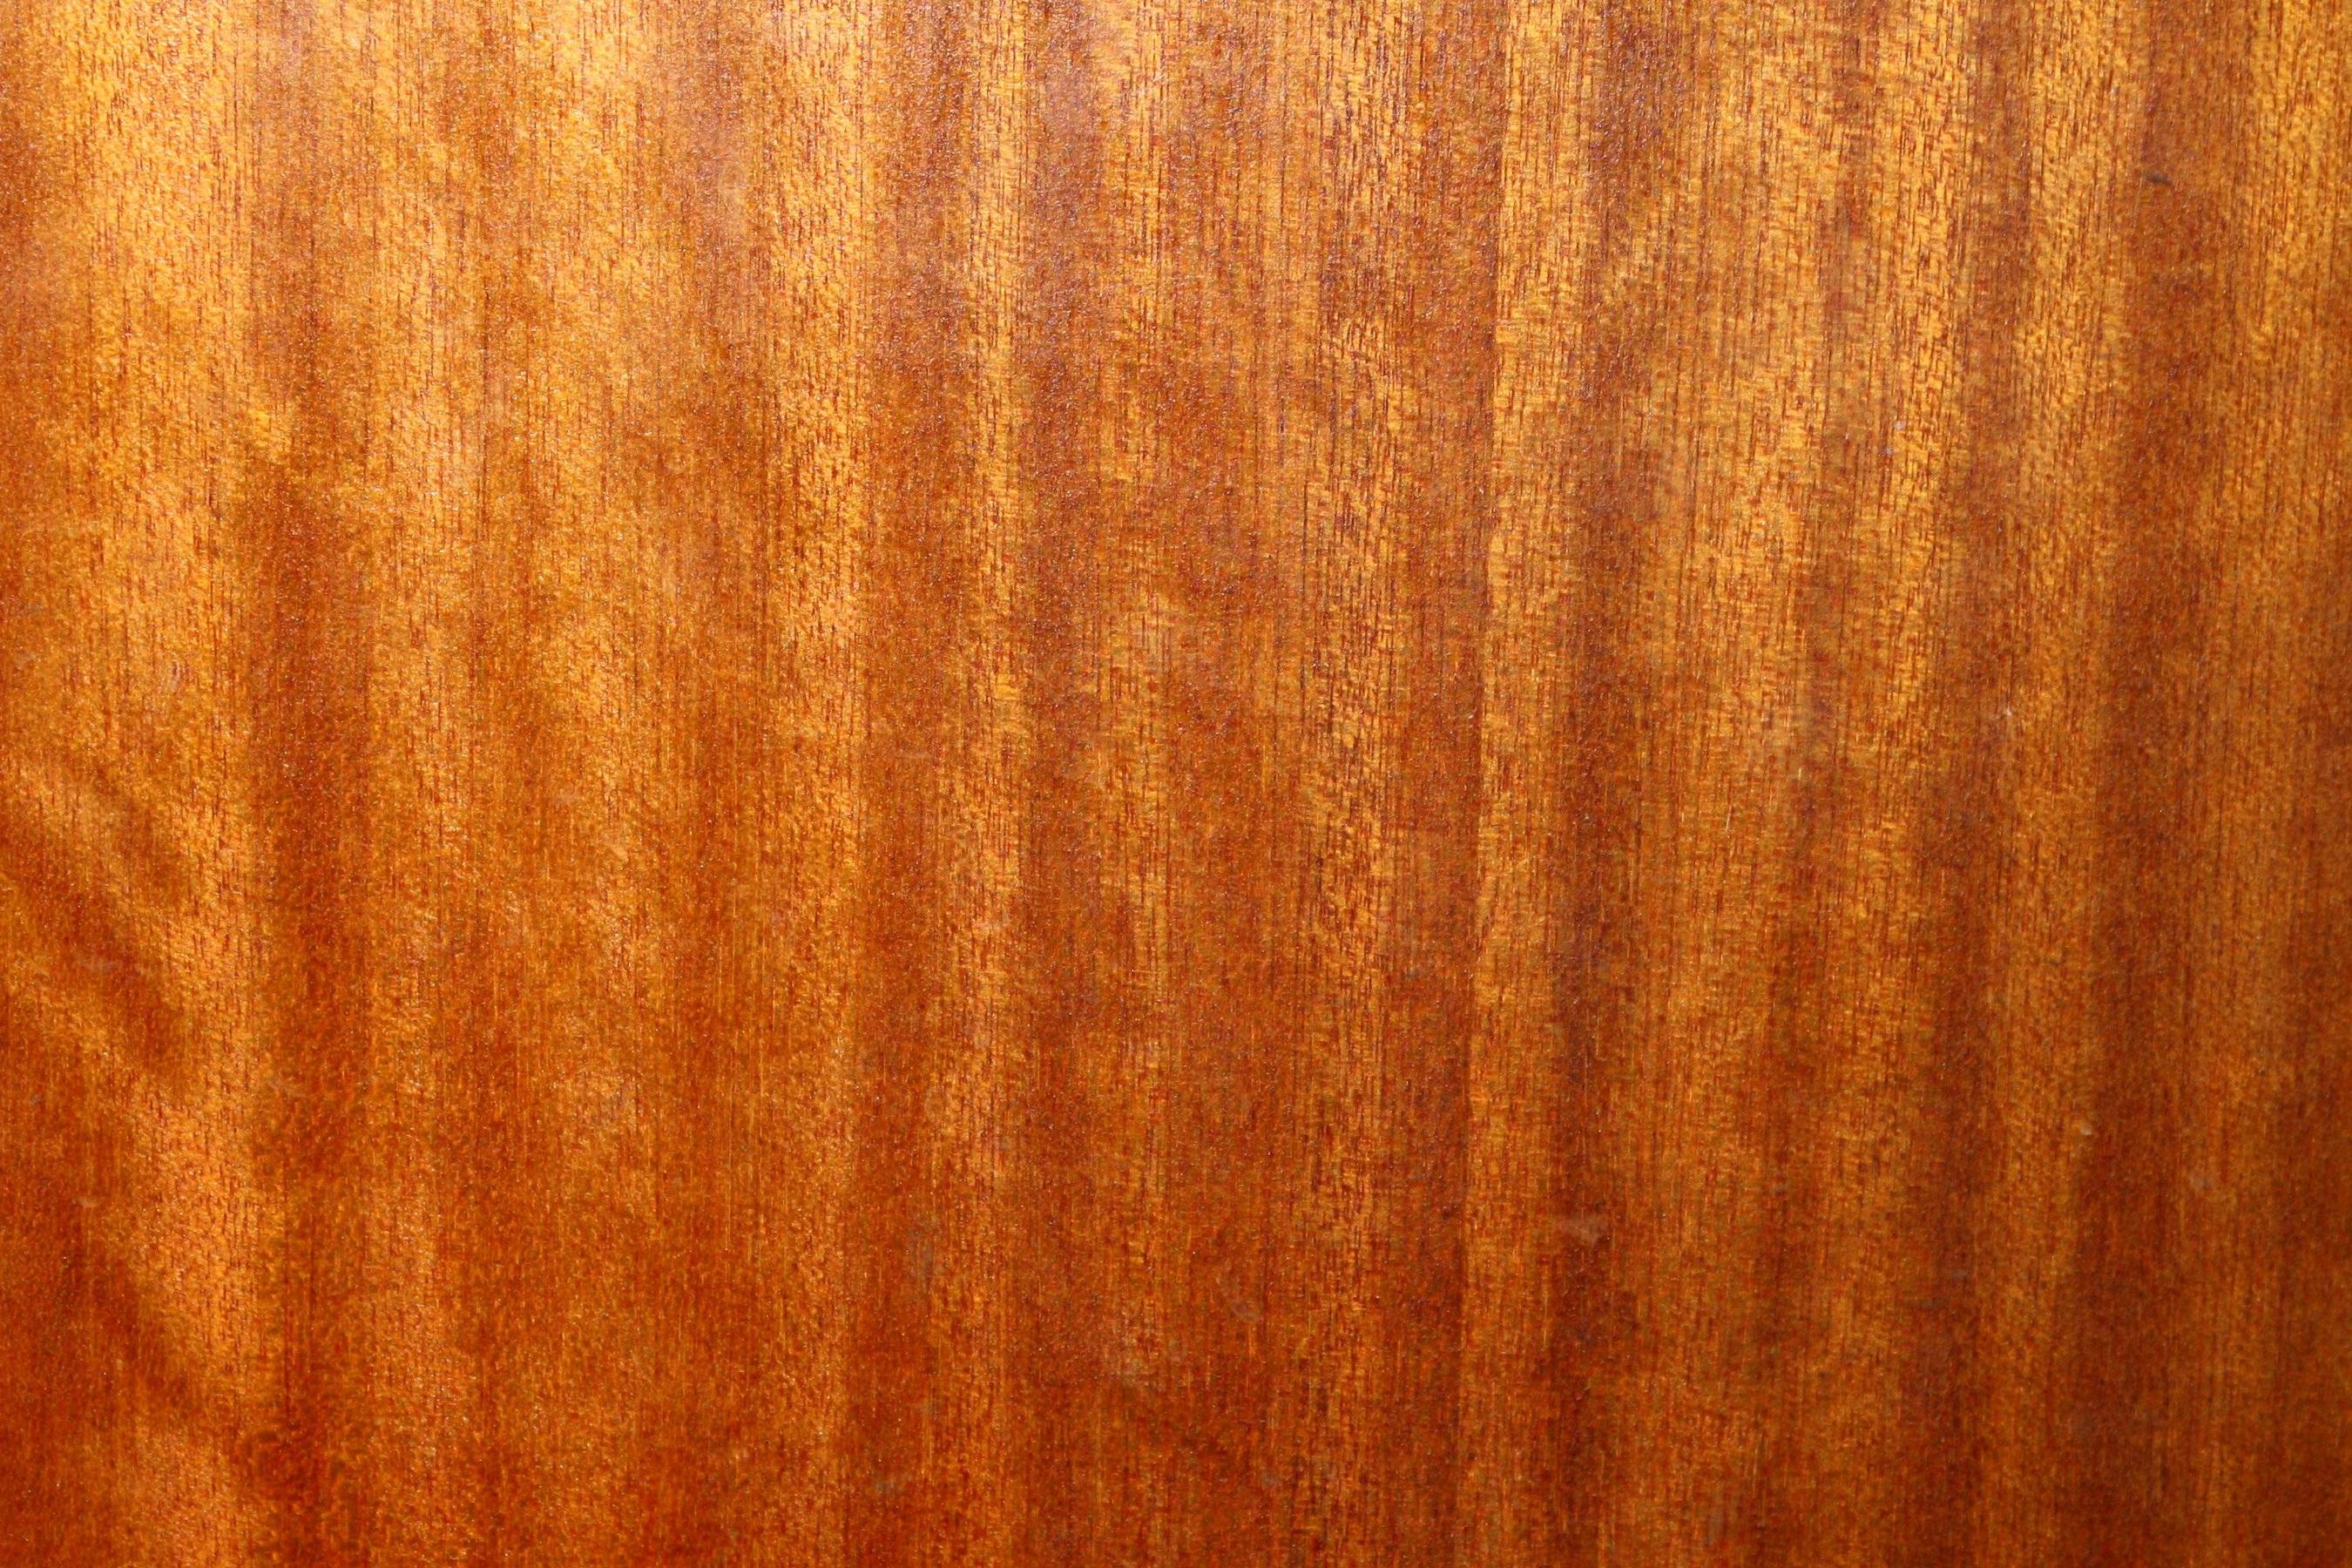 Wood Grain Desktop Wallpapers - Wallpaper Cave